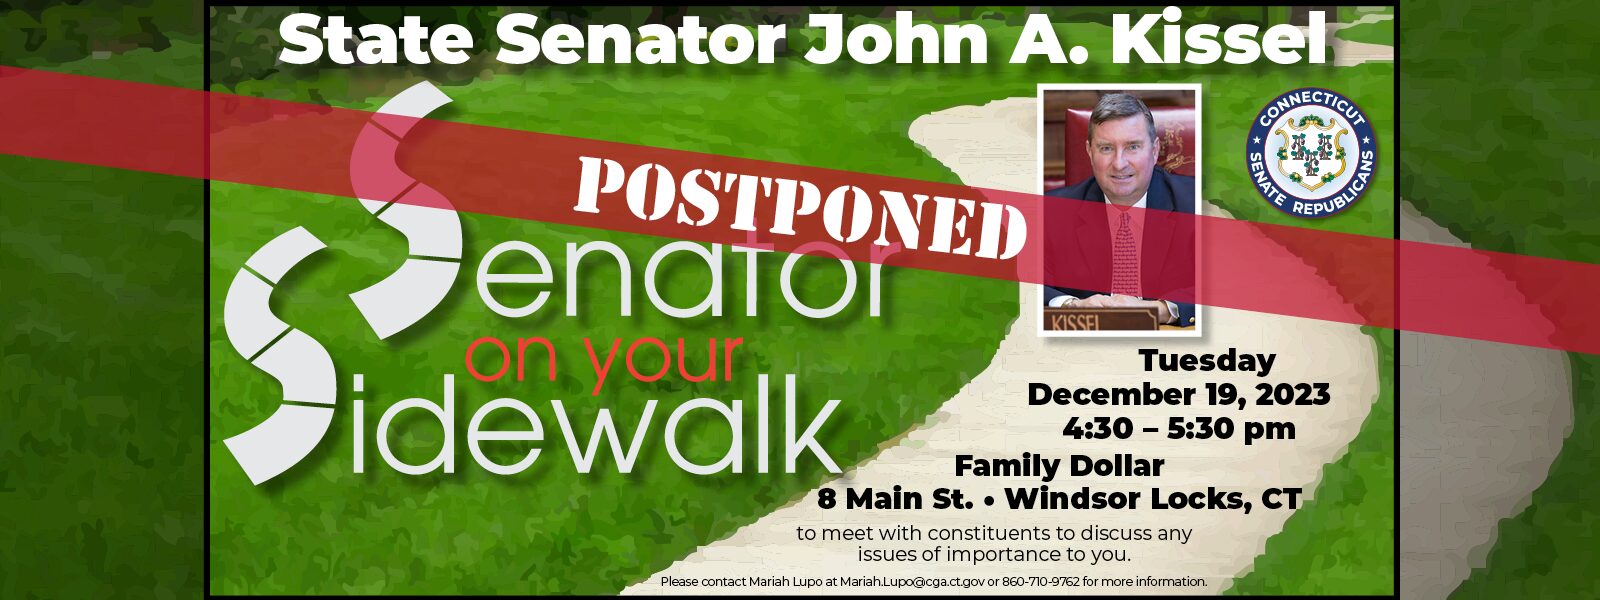 POSTPONED: Tuesday in Windsor Locks: “Senator on your Sidewalk”